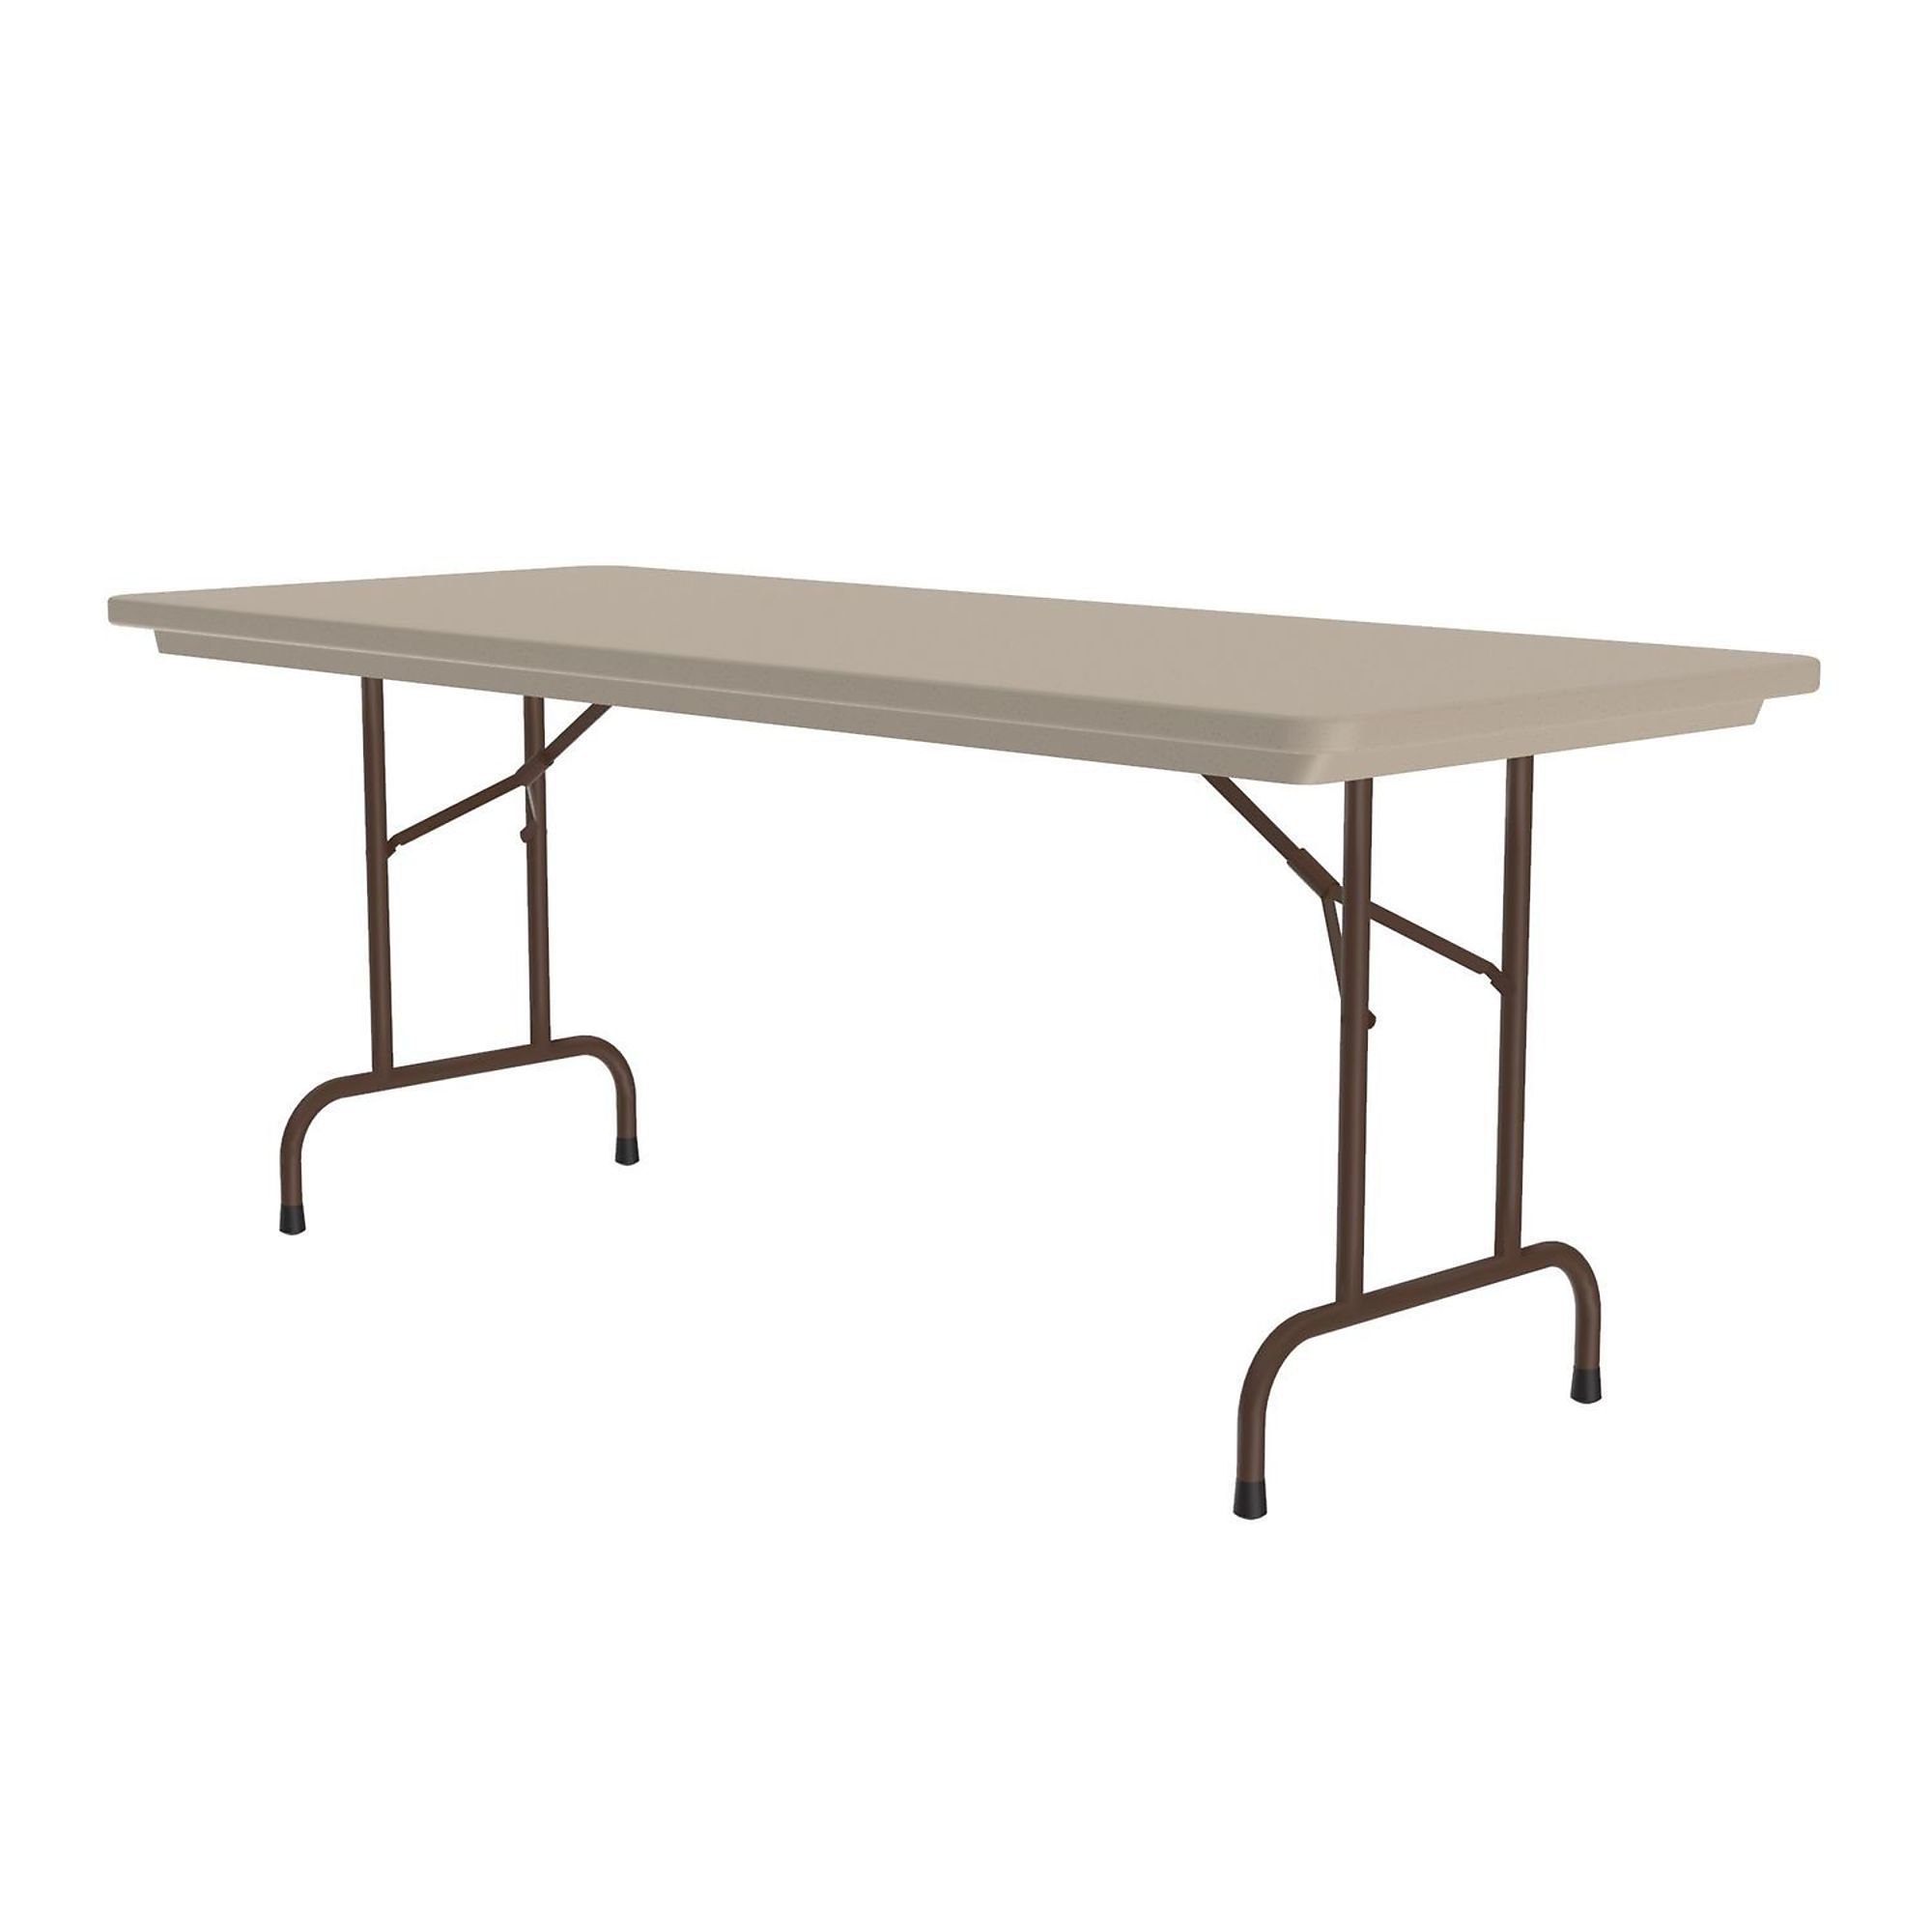 Correll, Plastic Folding Table, Mocha Granite Top, 30x60, Height 29 in, Width 30 in, Length 60 in, Model R3060-24